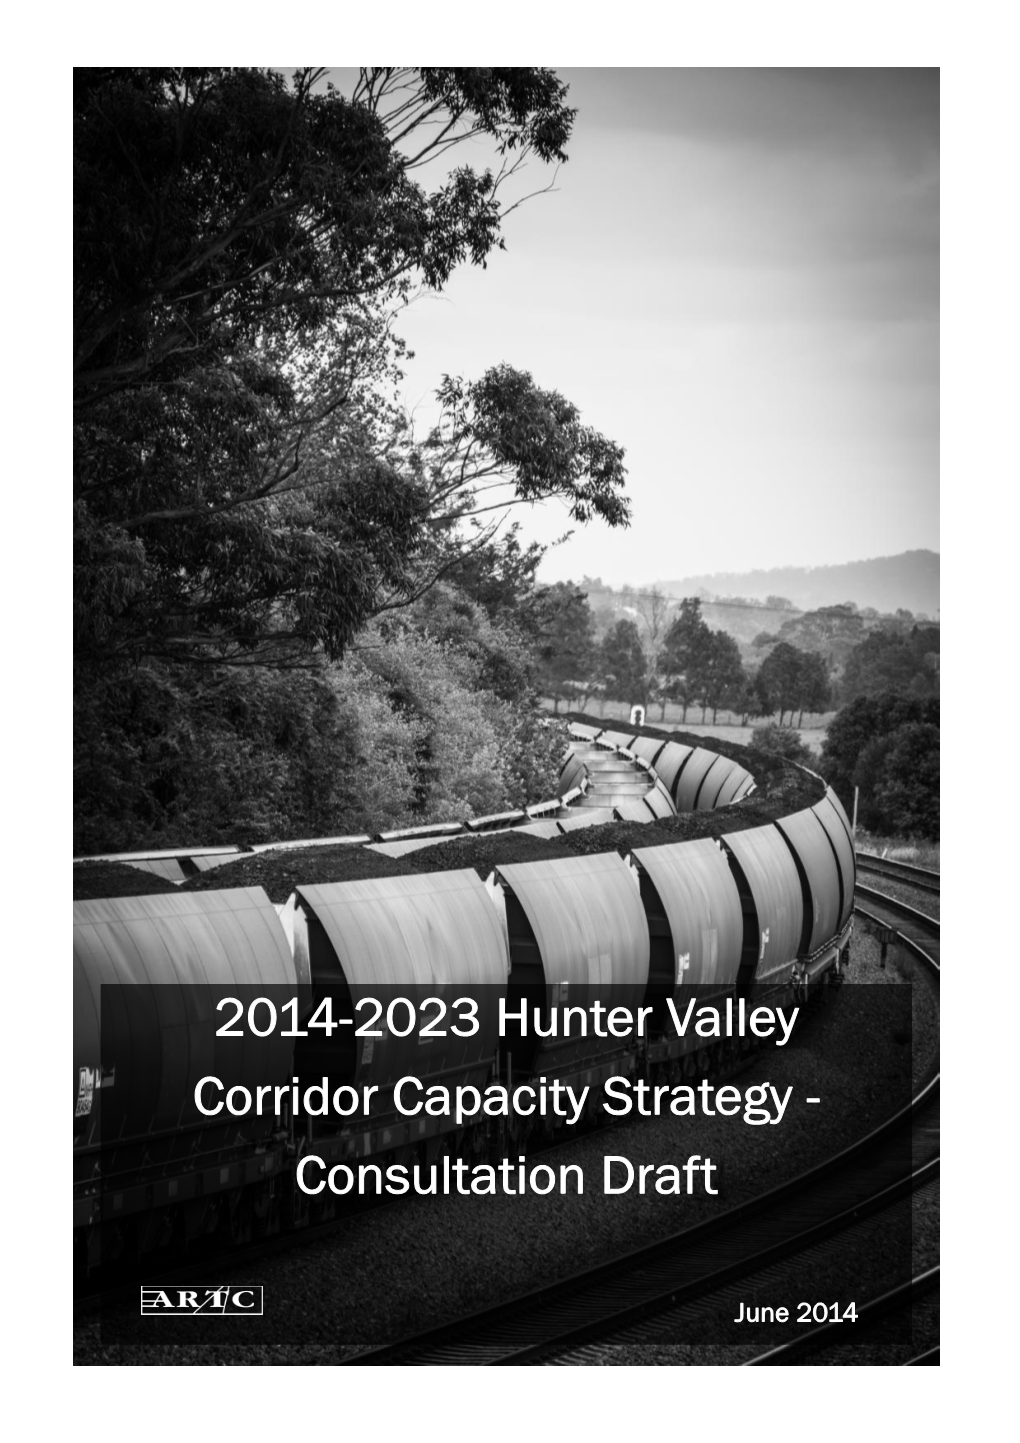 2014-2023 Hunter Valley Corridor Capacity Strategy - Consultation Draft